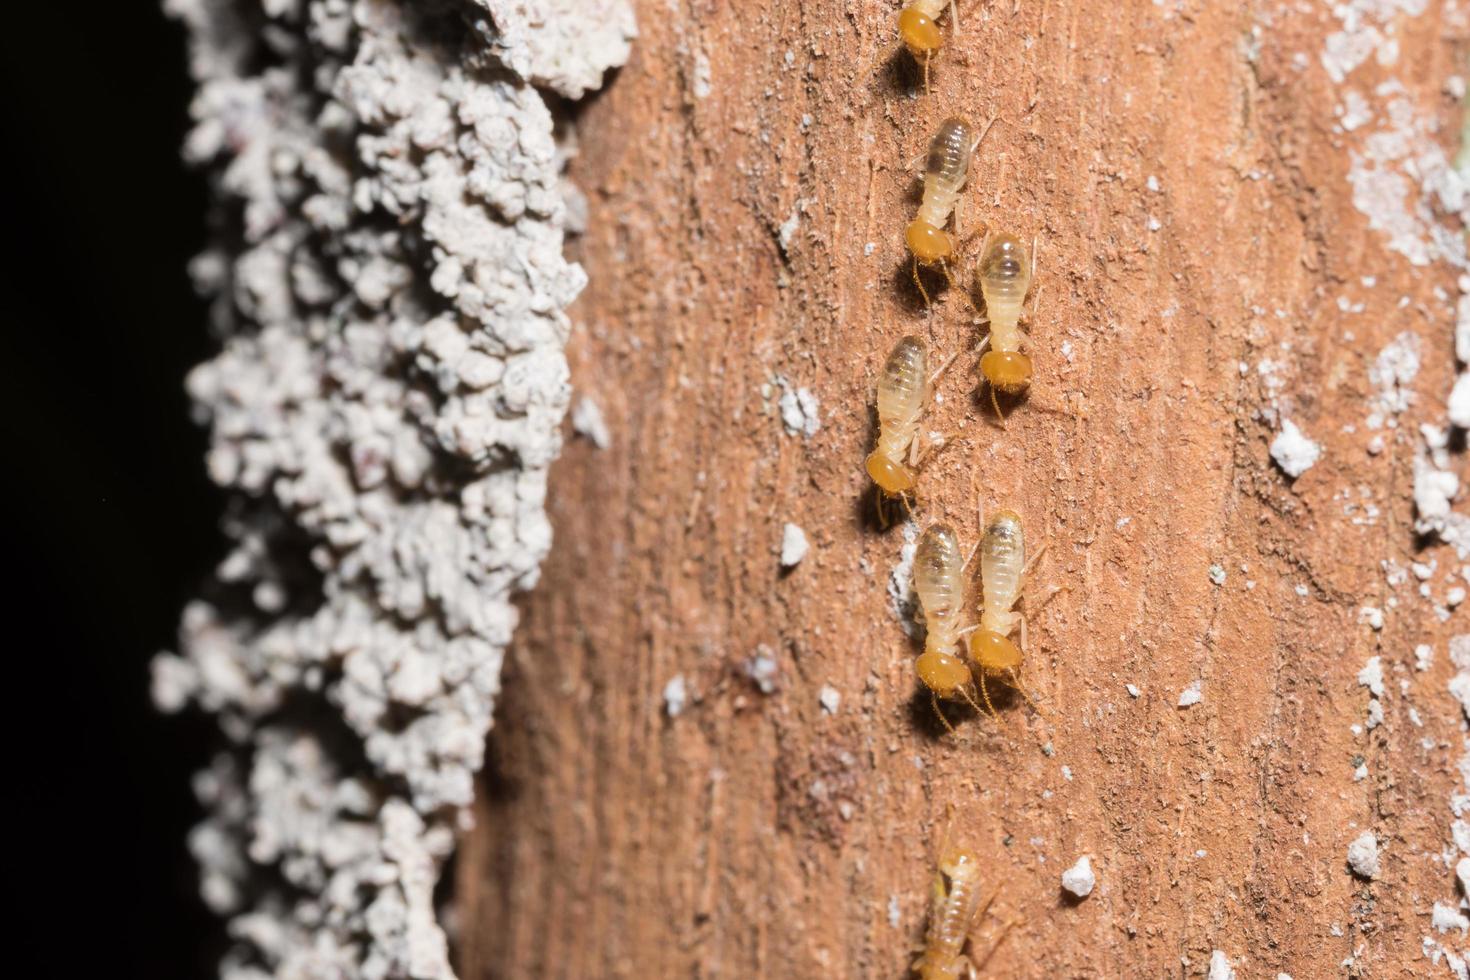 termiter i en stock foto